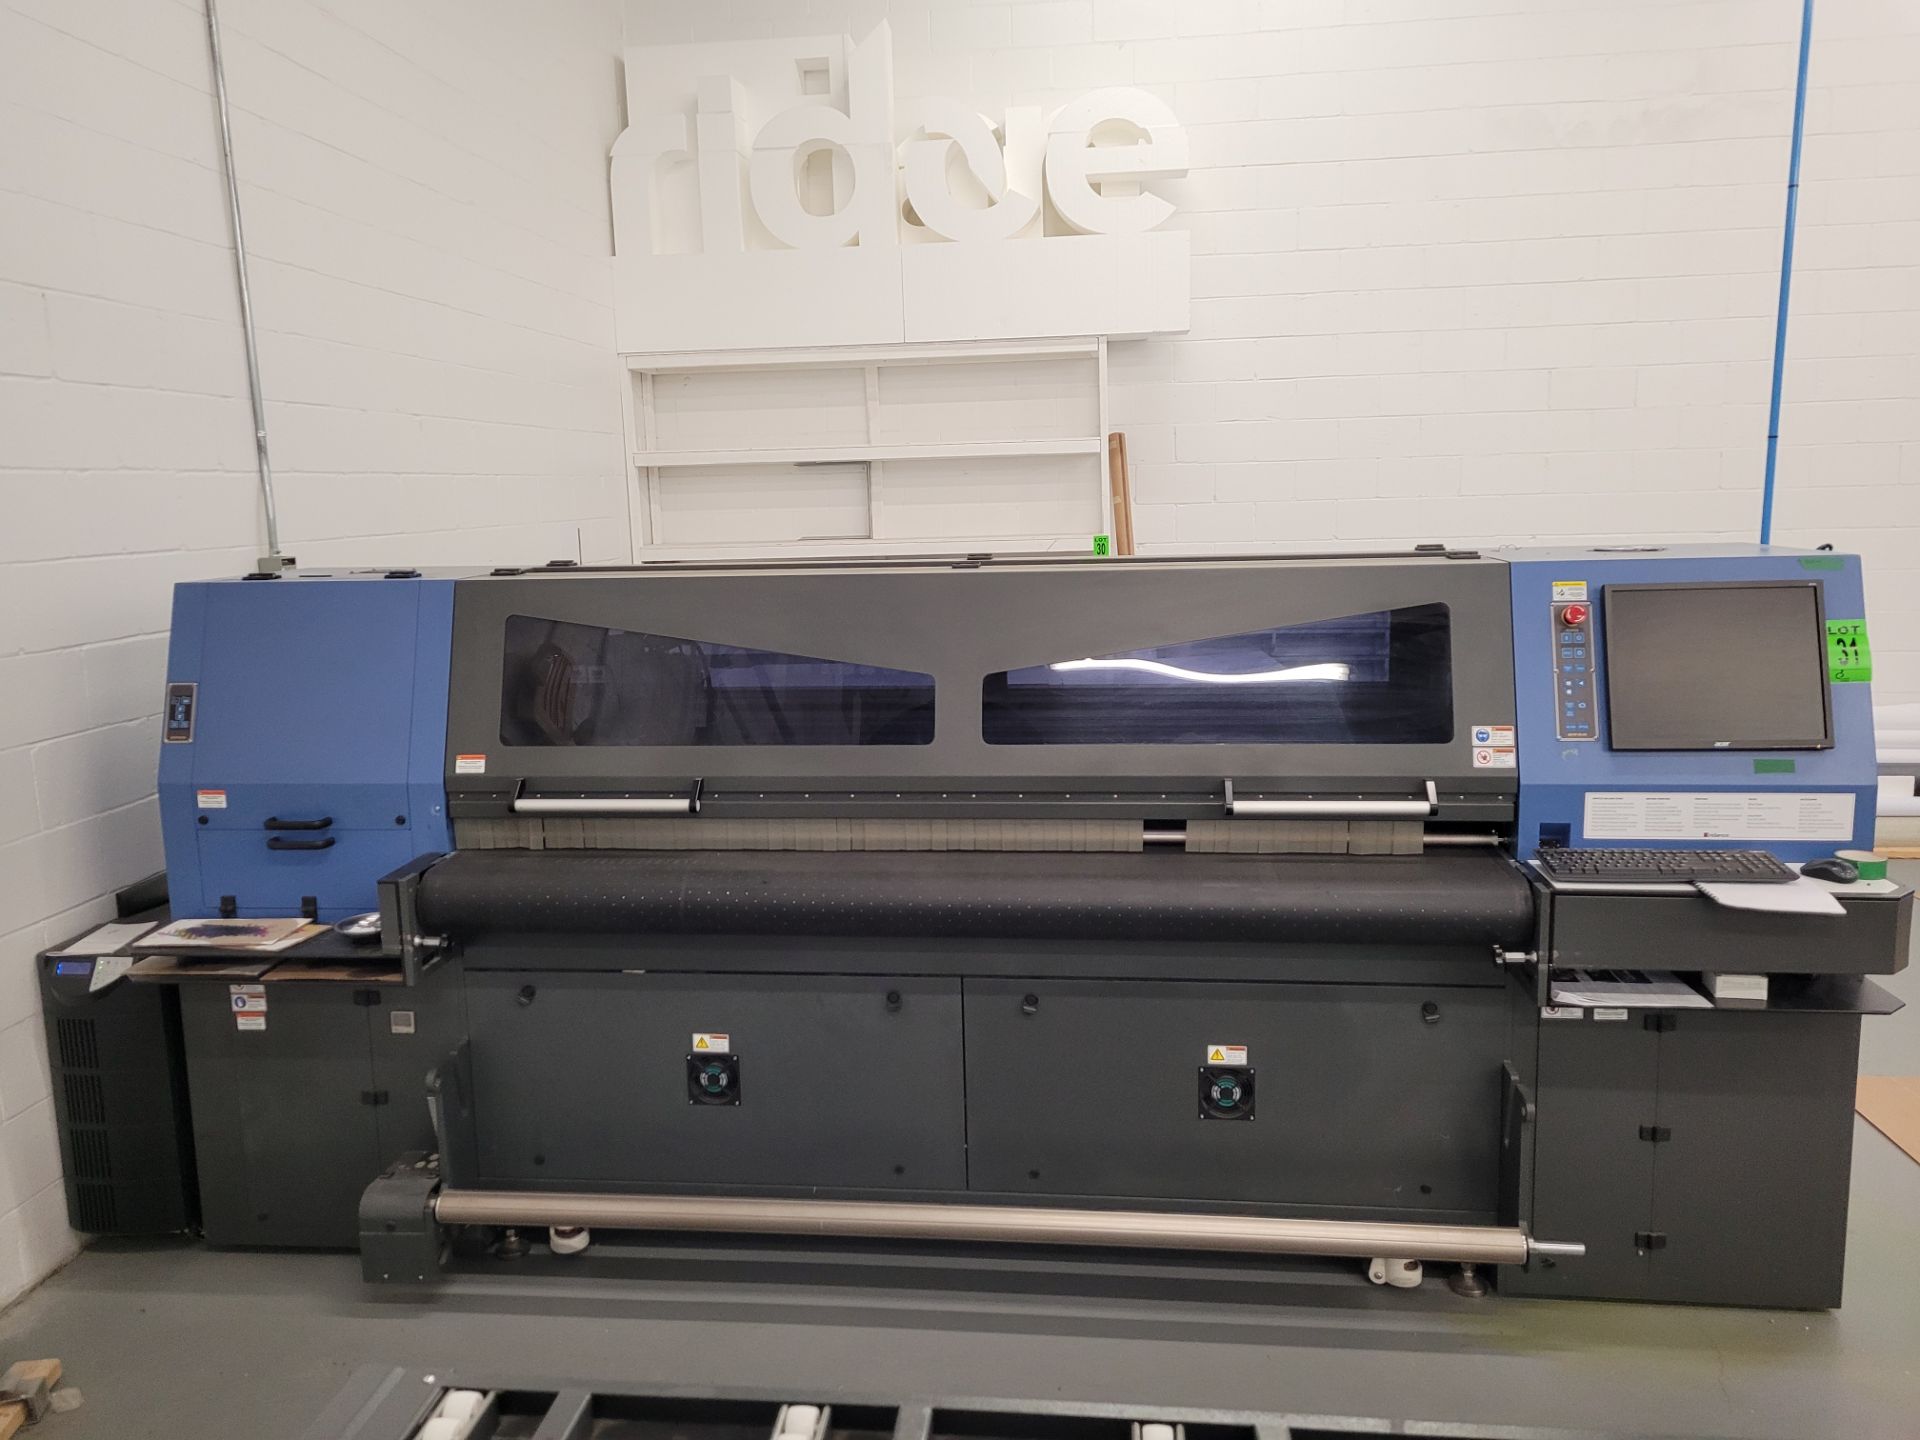 DYSS UV Printing Machine mod. Lasco & Apollo, ser. 221674RR000100264, 220V, includes conveyors and